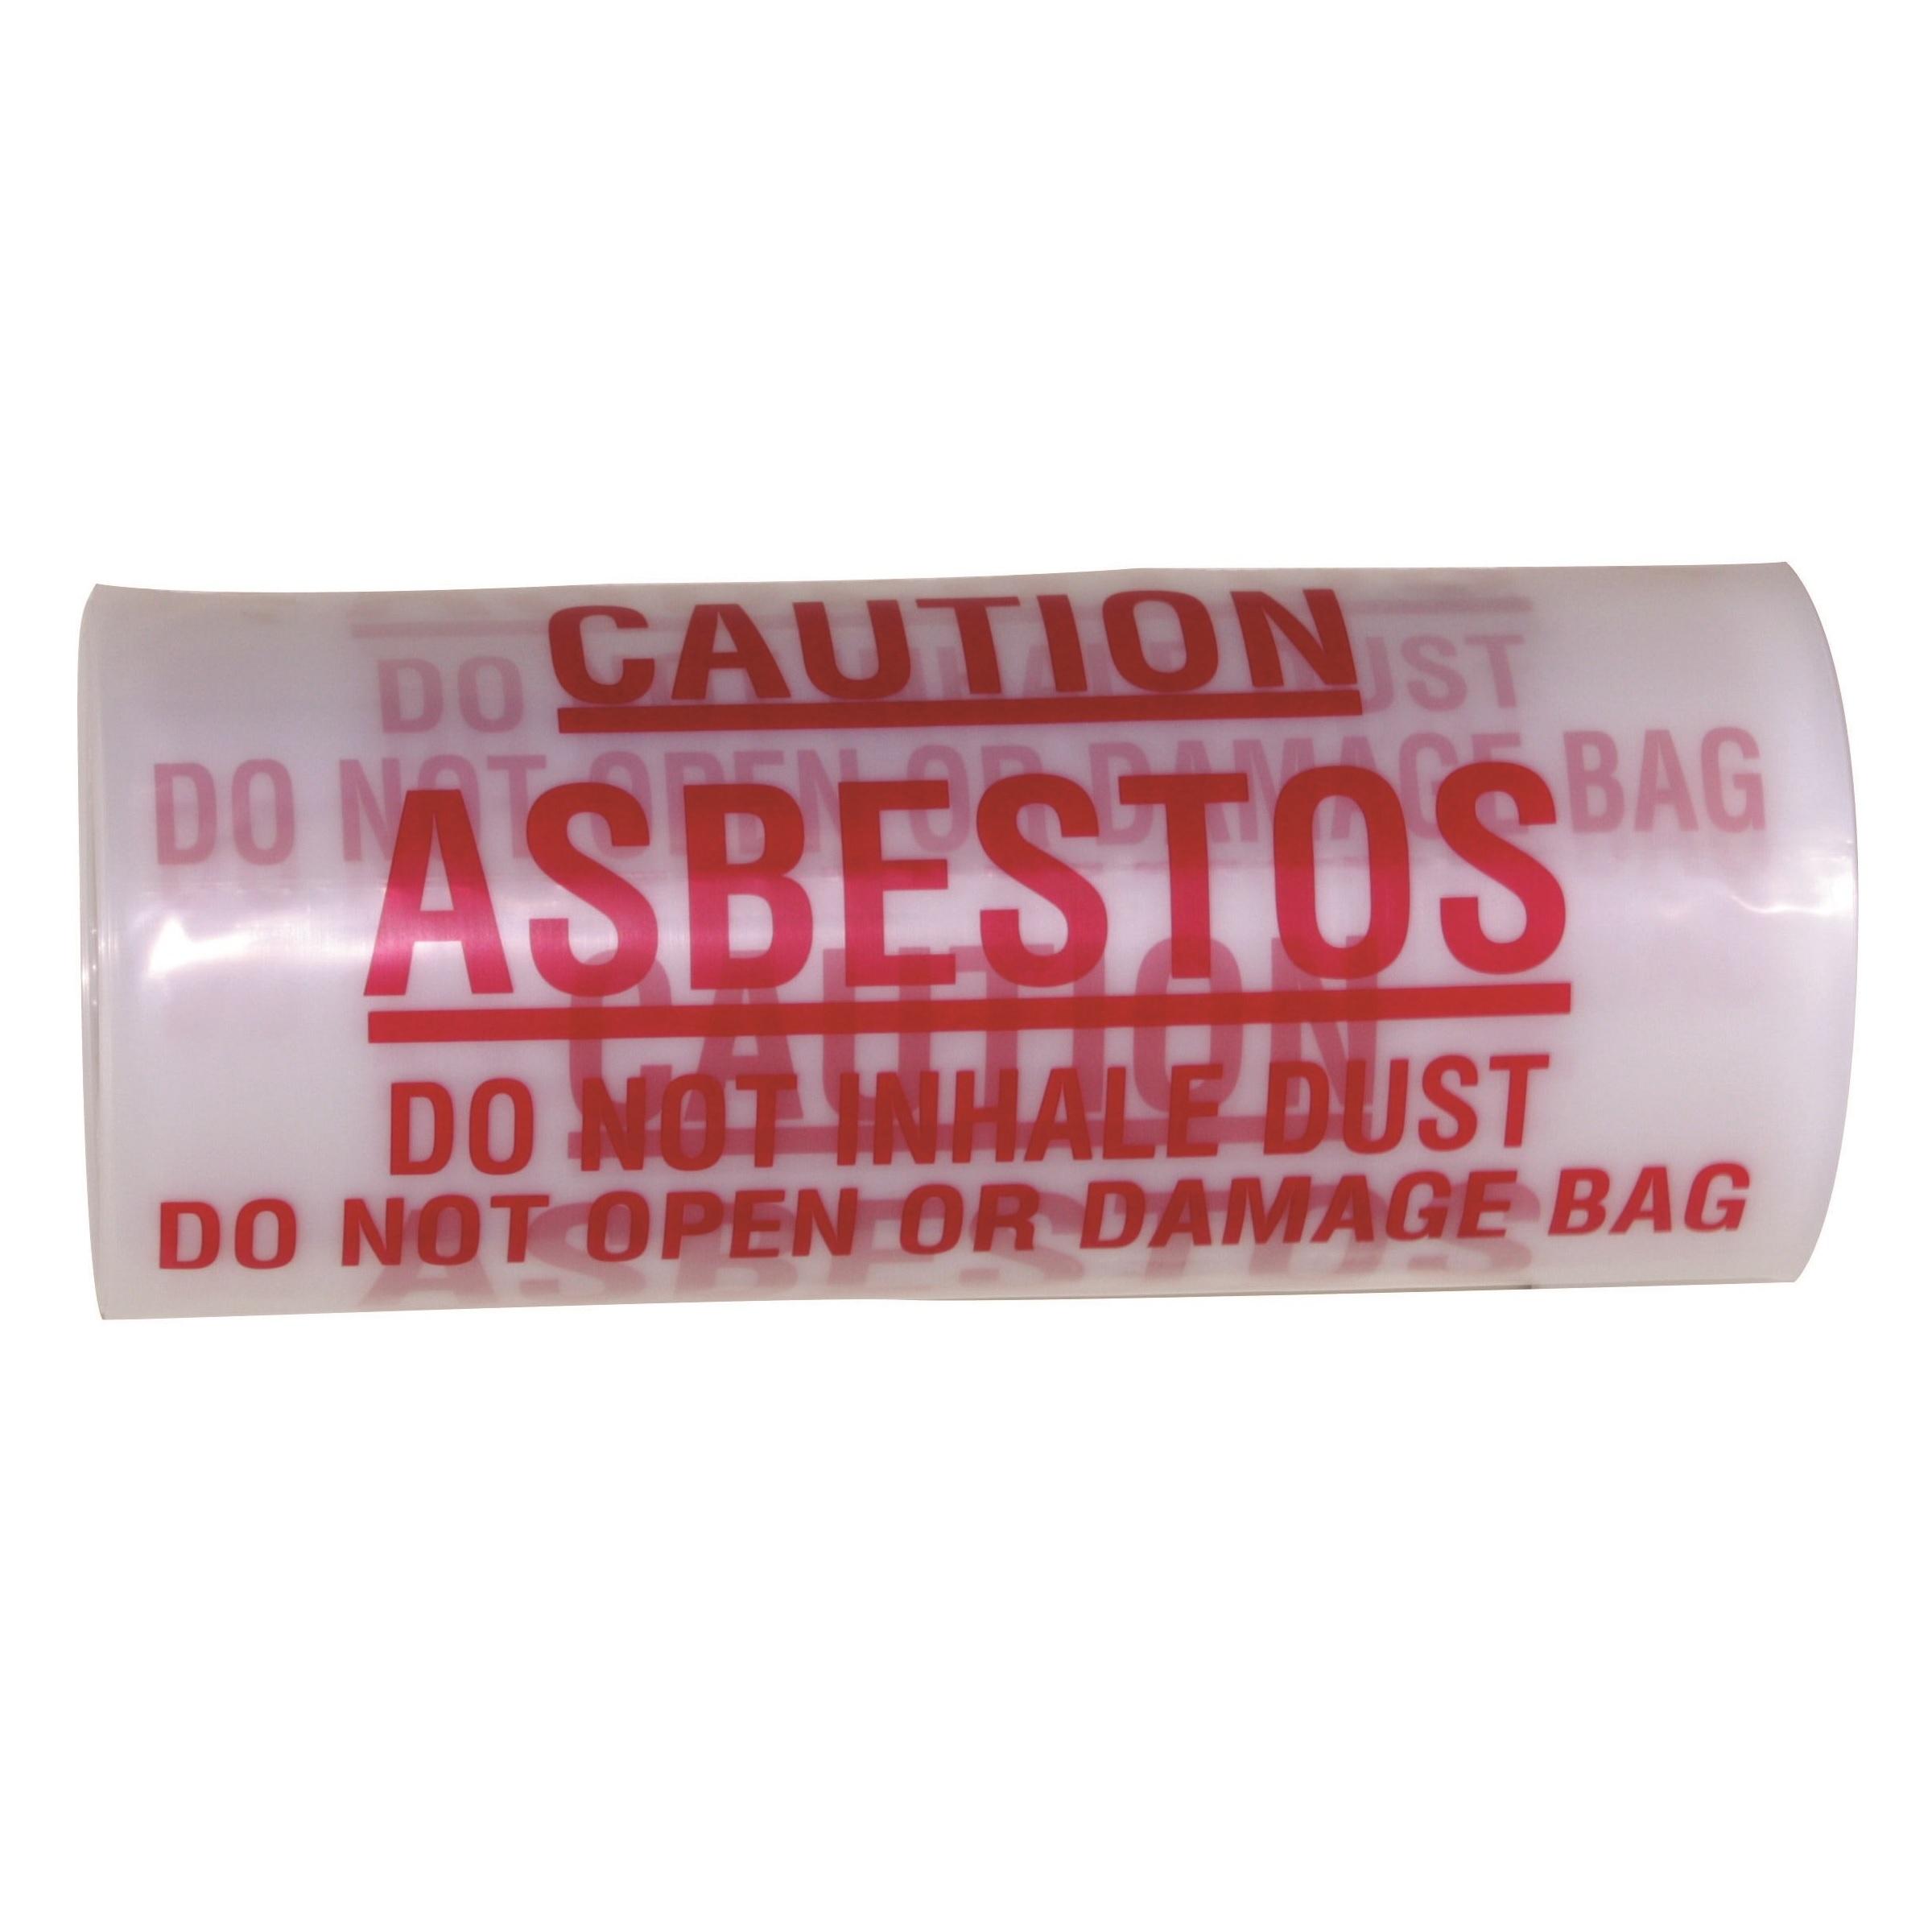 09. Asbestos Waste Containment